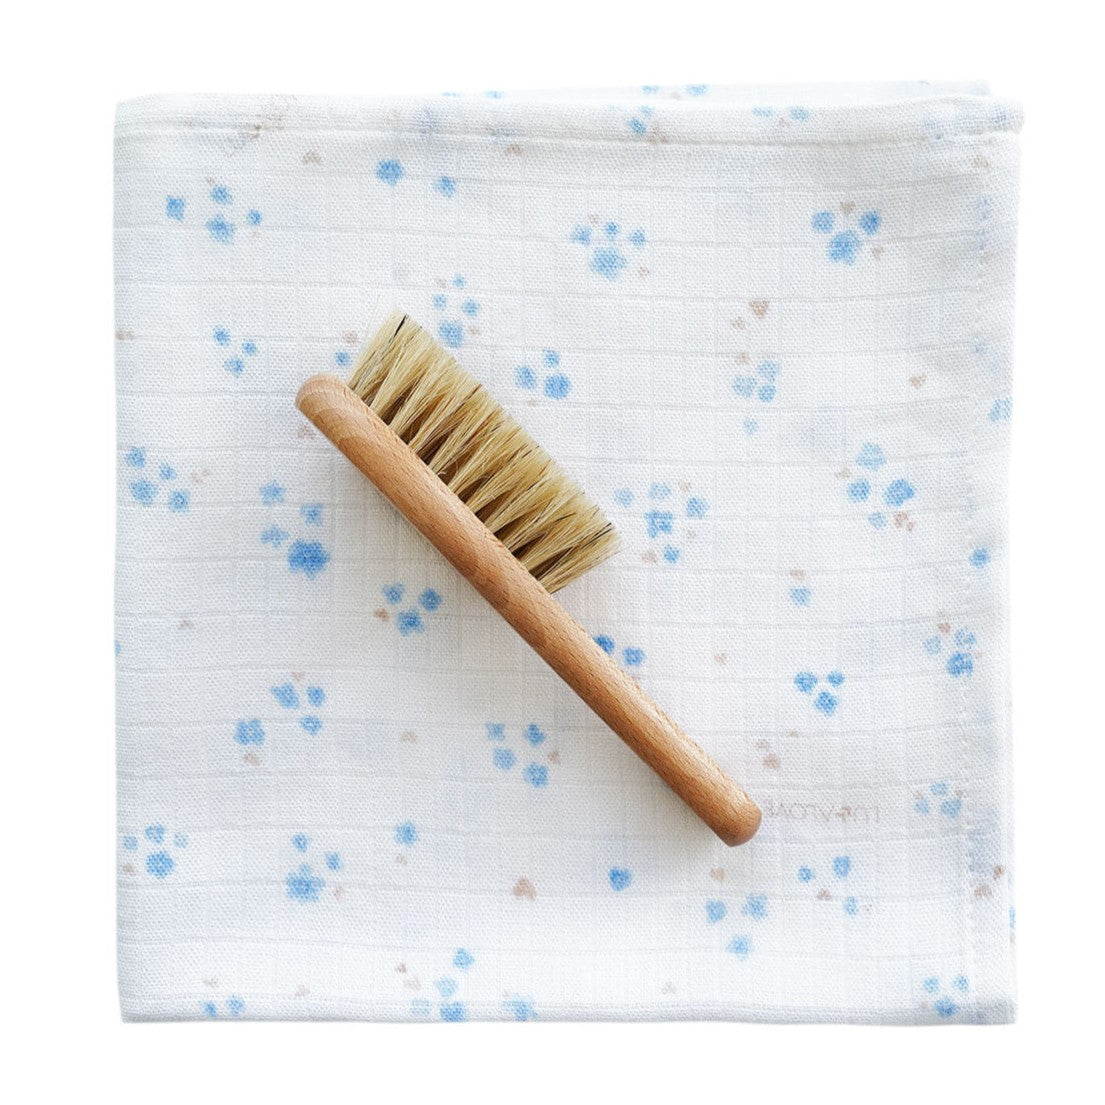 Lullalove: brush made of natural bristles + muslin washer